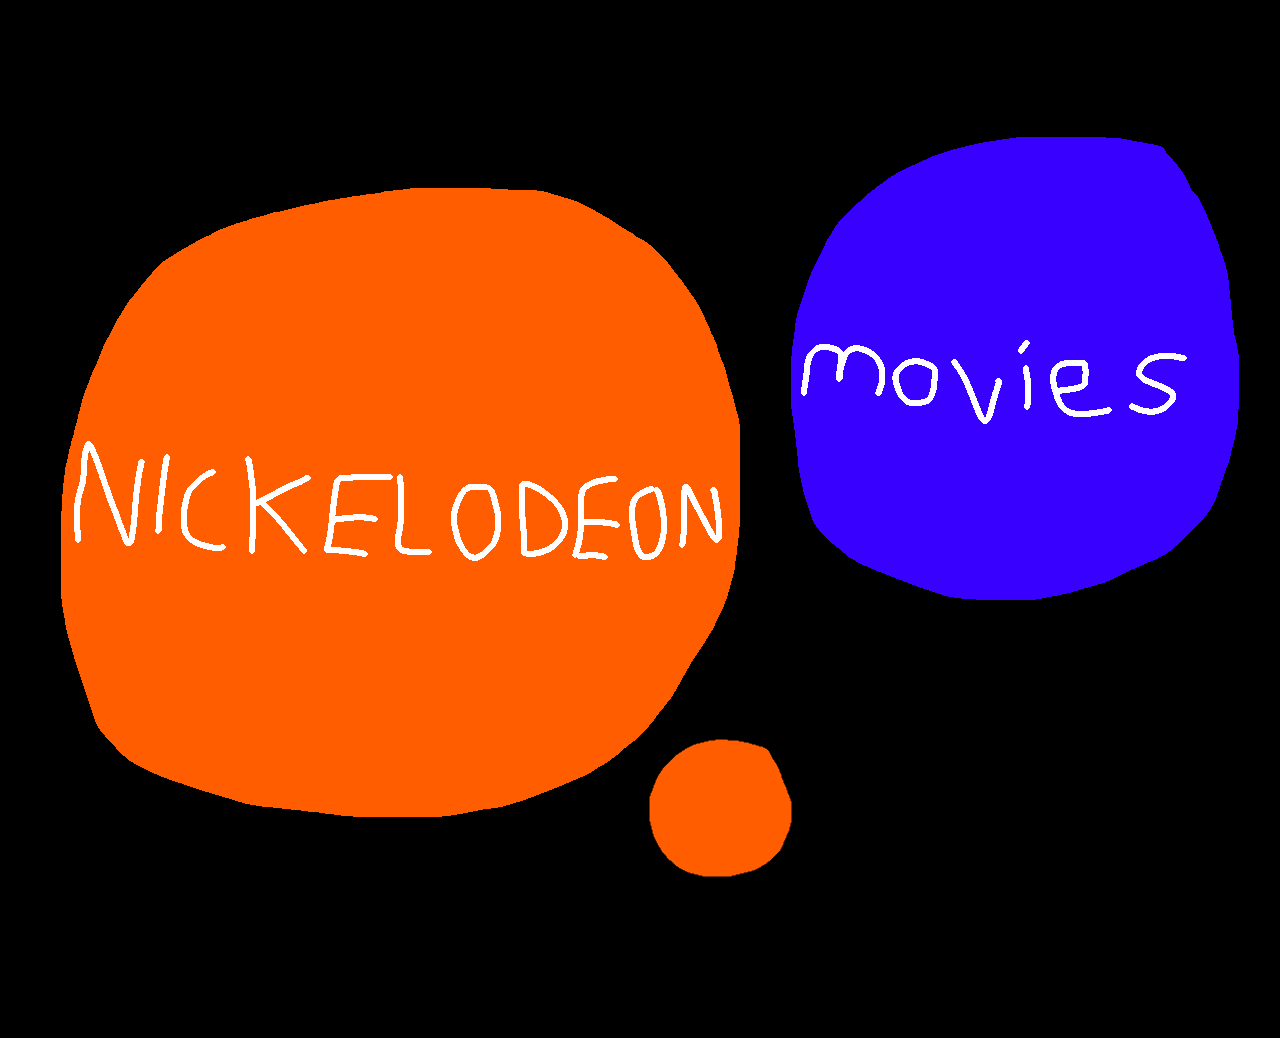 nickelodeon movies 2002 logo by JoeyHensonStudios on DeviantArt